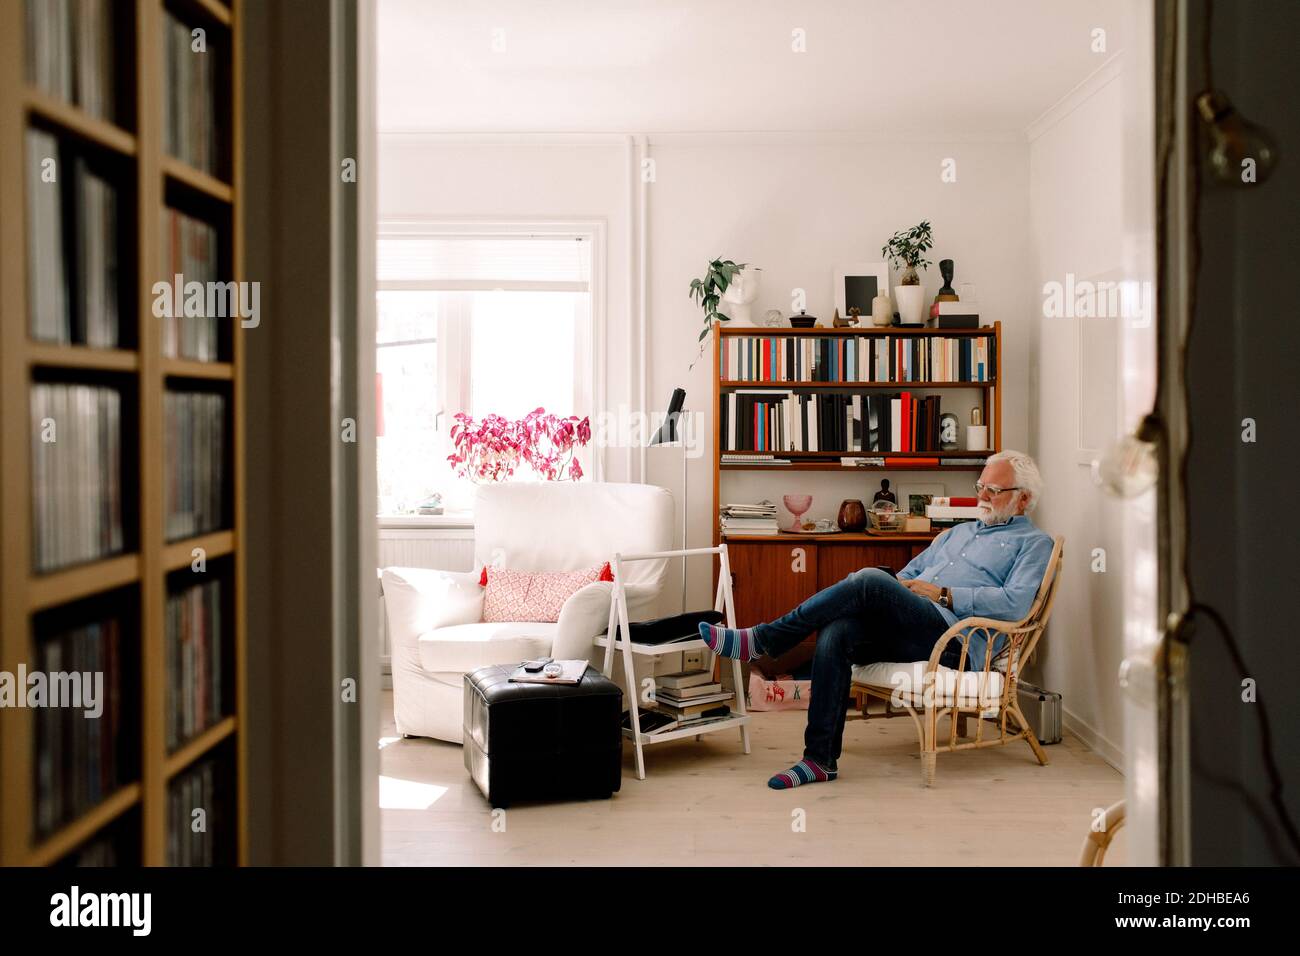 Full length of senior man sitting on chair in living room seen from doorway Stock Photo